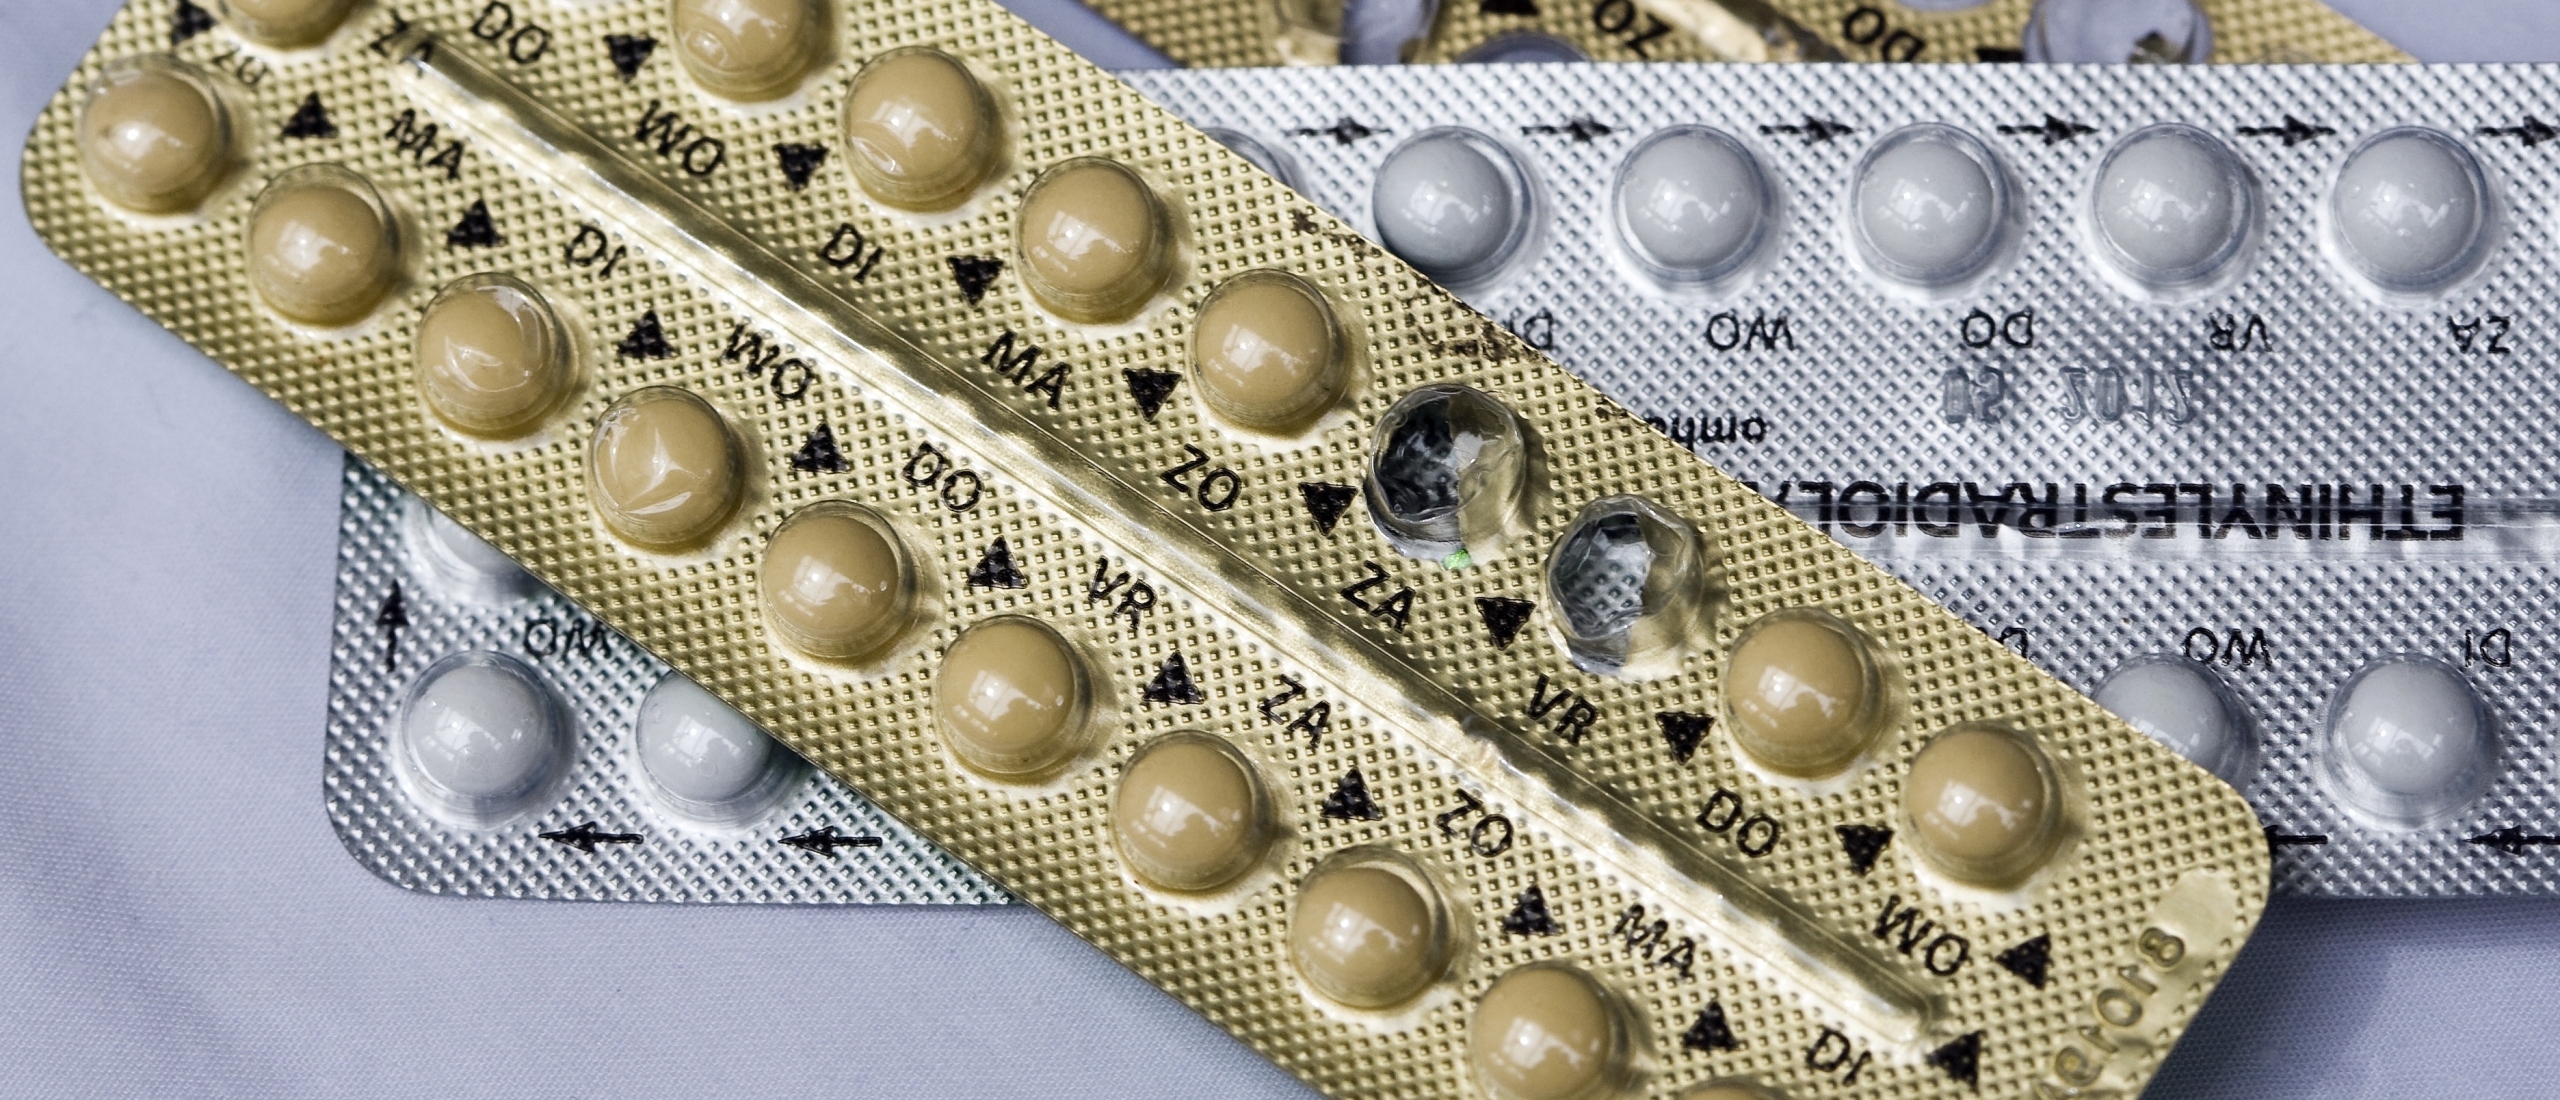 Aantal vrouwen met hormonale anticonceptie weer gedaald